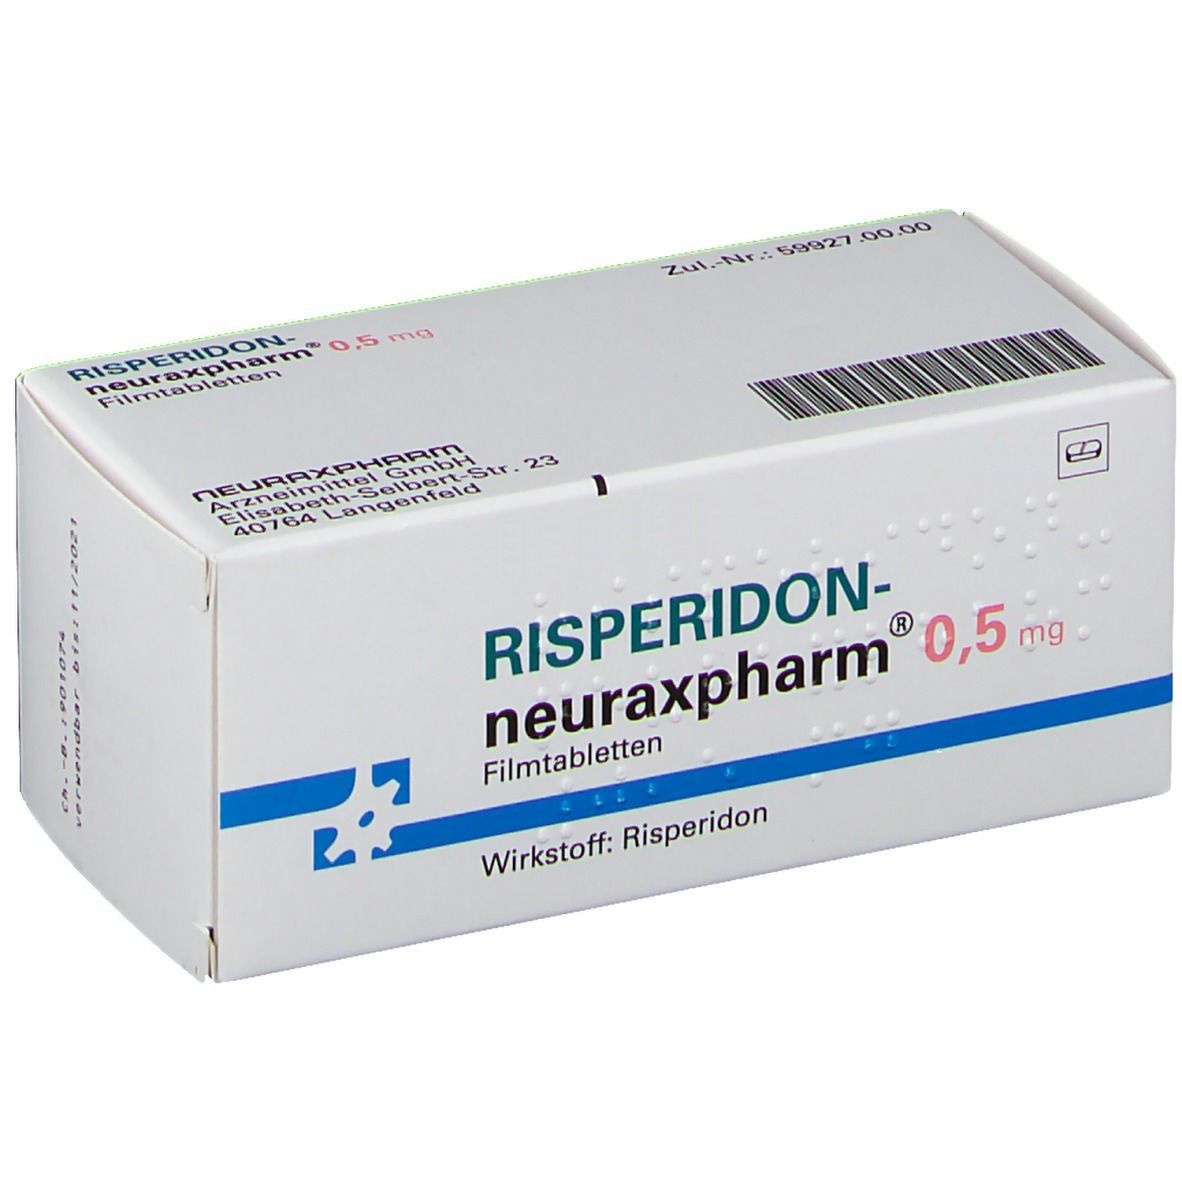 Risperidon-neuraxpharm® 0,5 mg